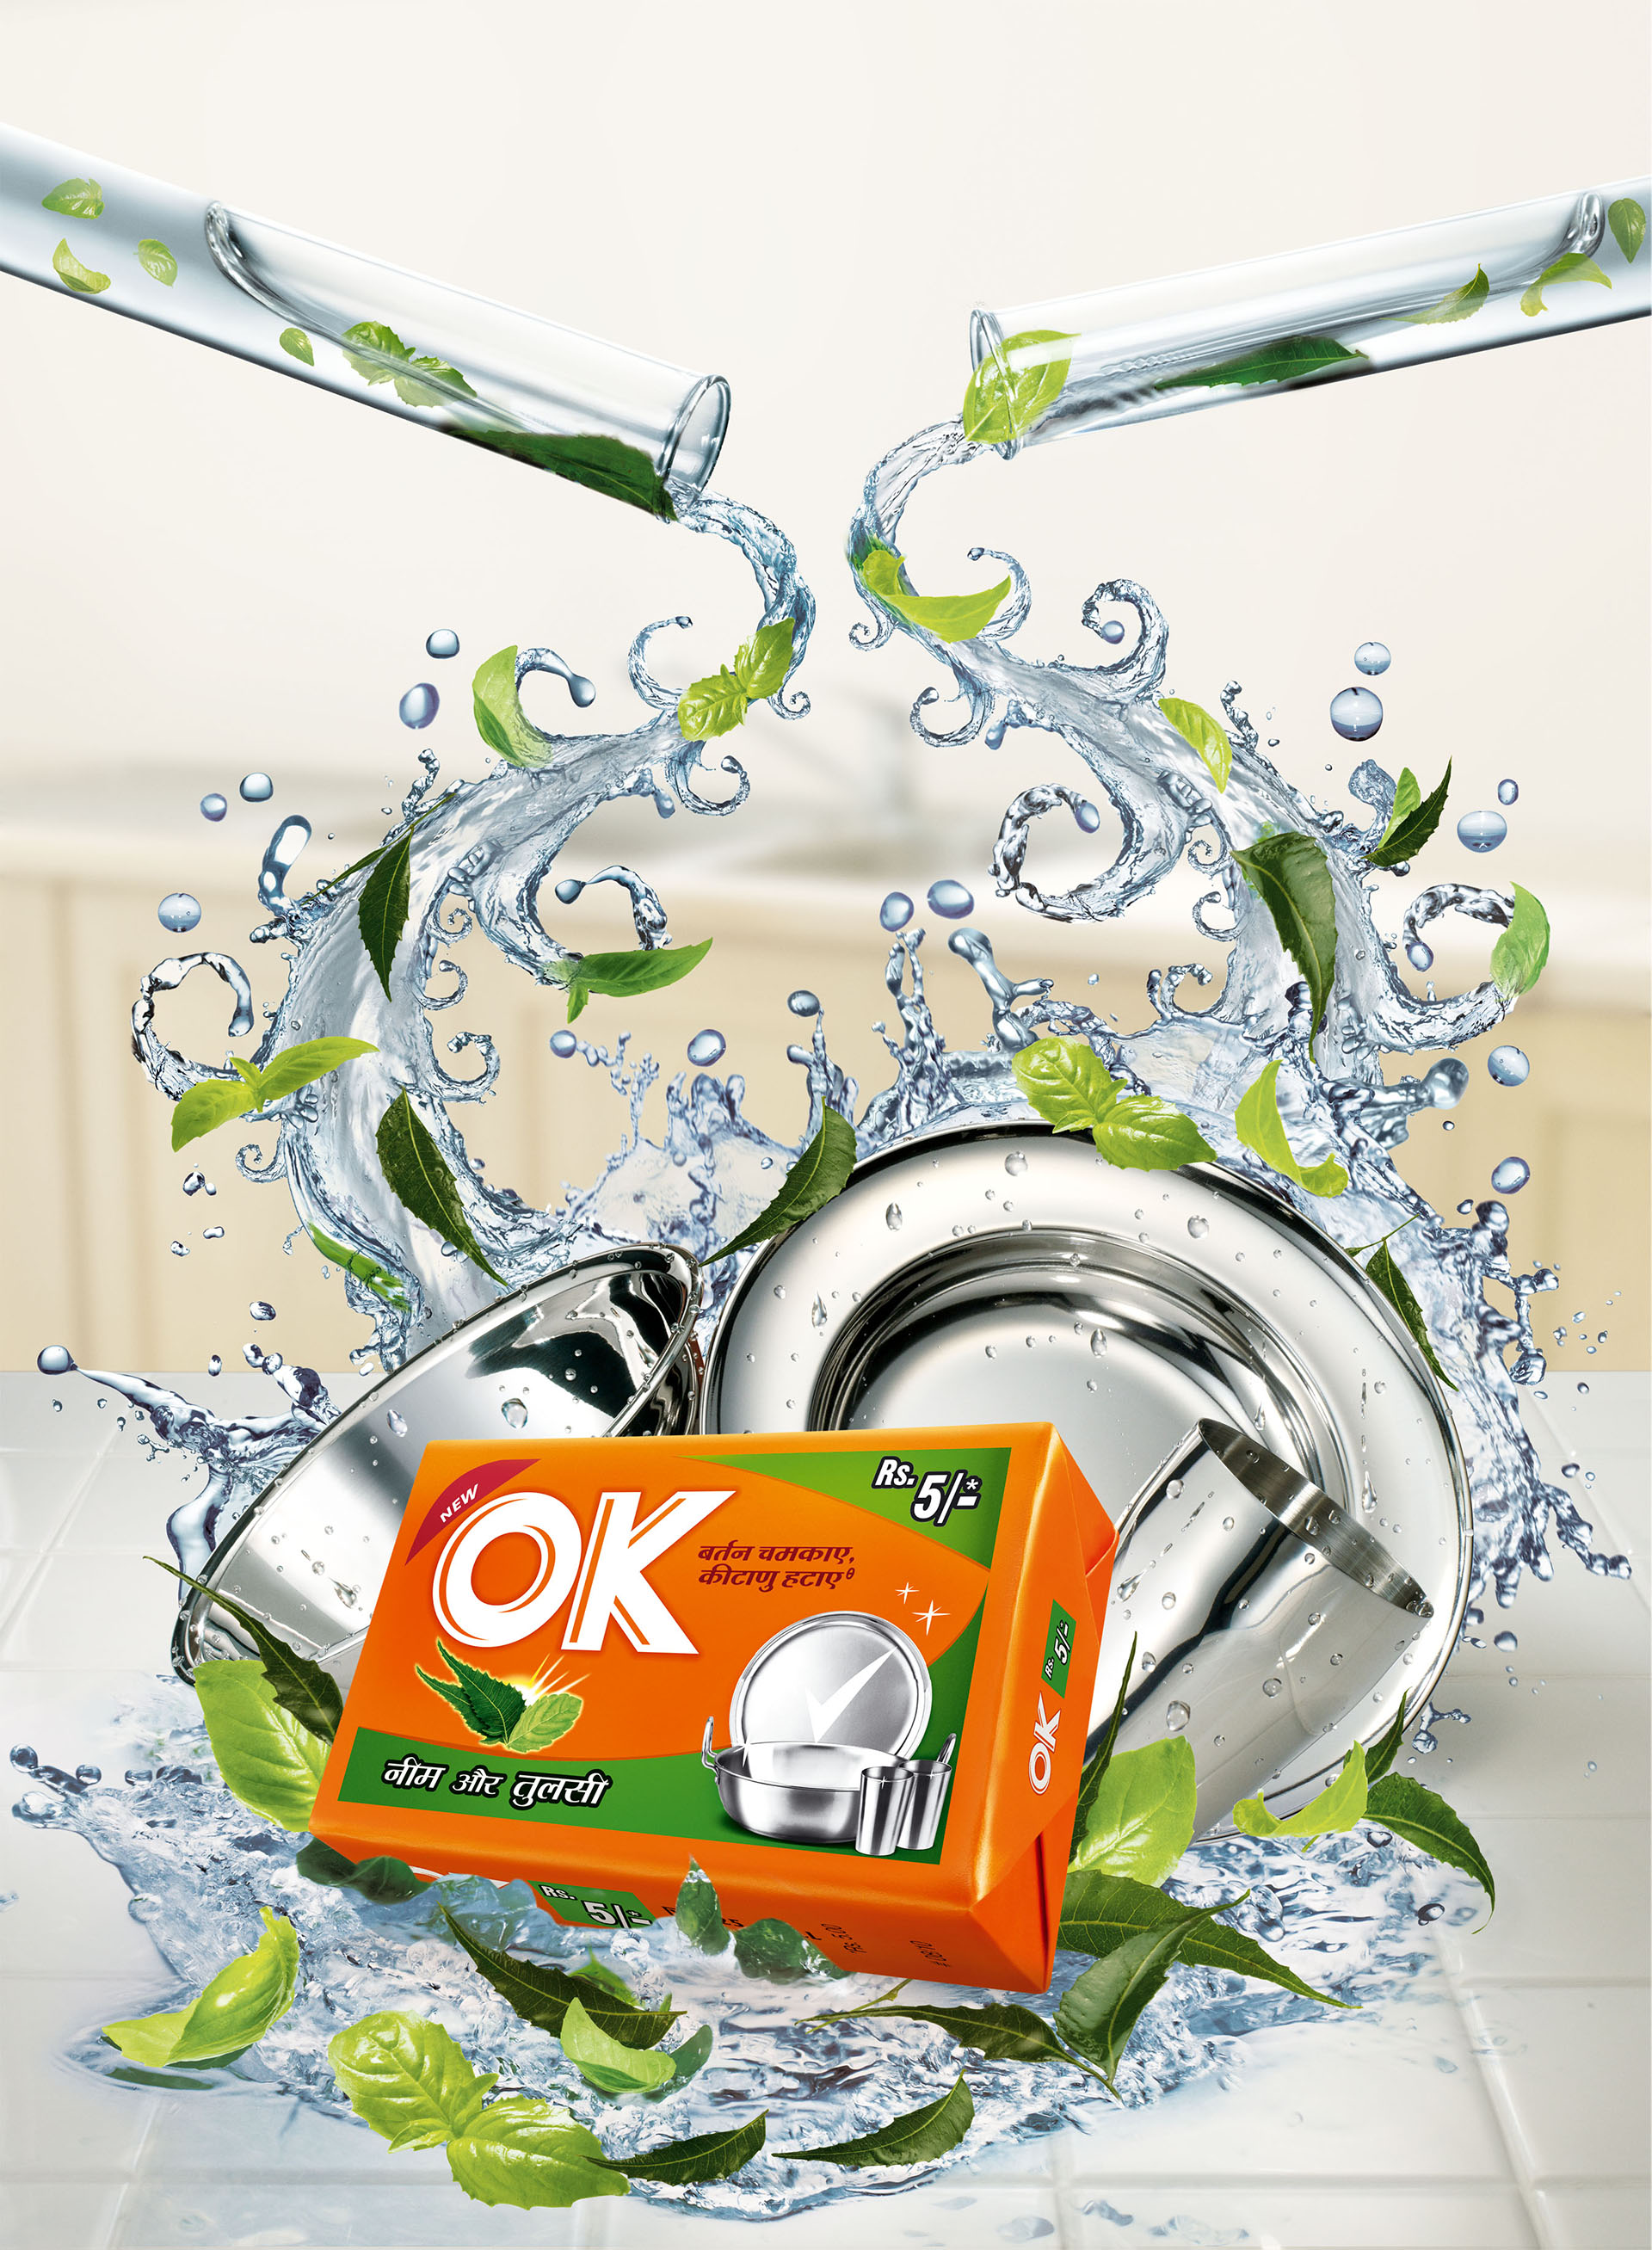 008a Ok detergent